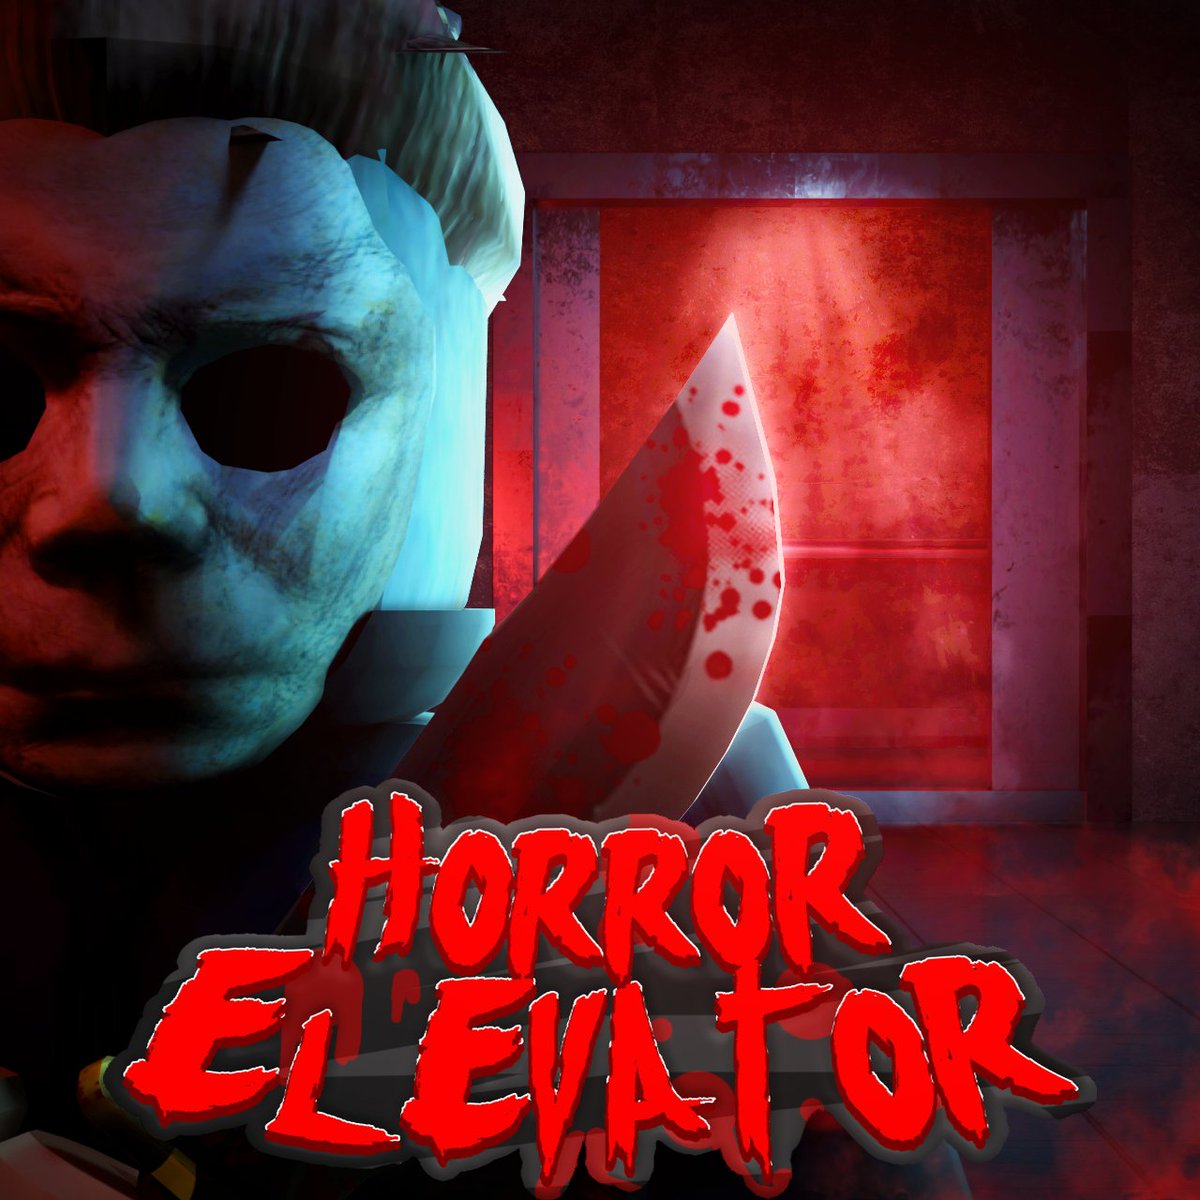 Horror Elevator! - Roblox